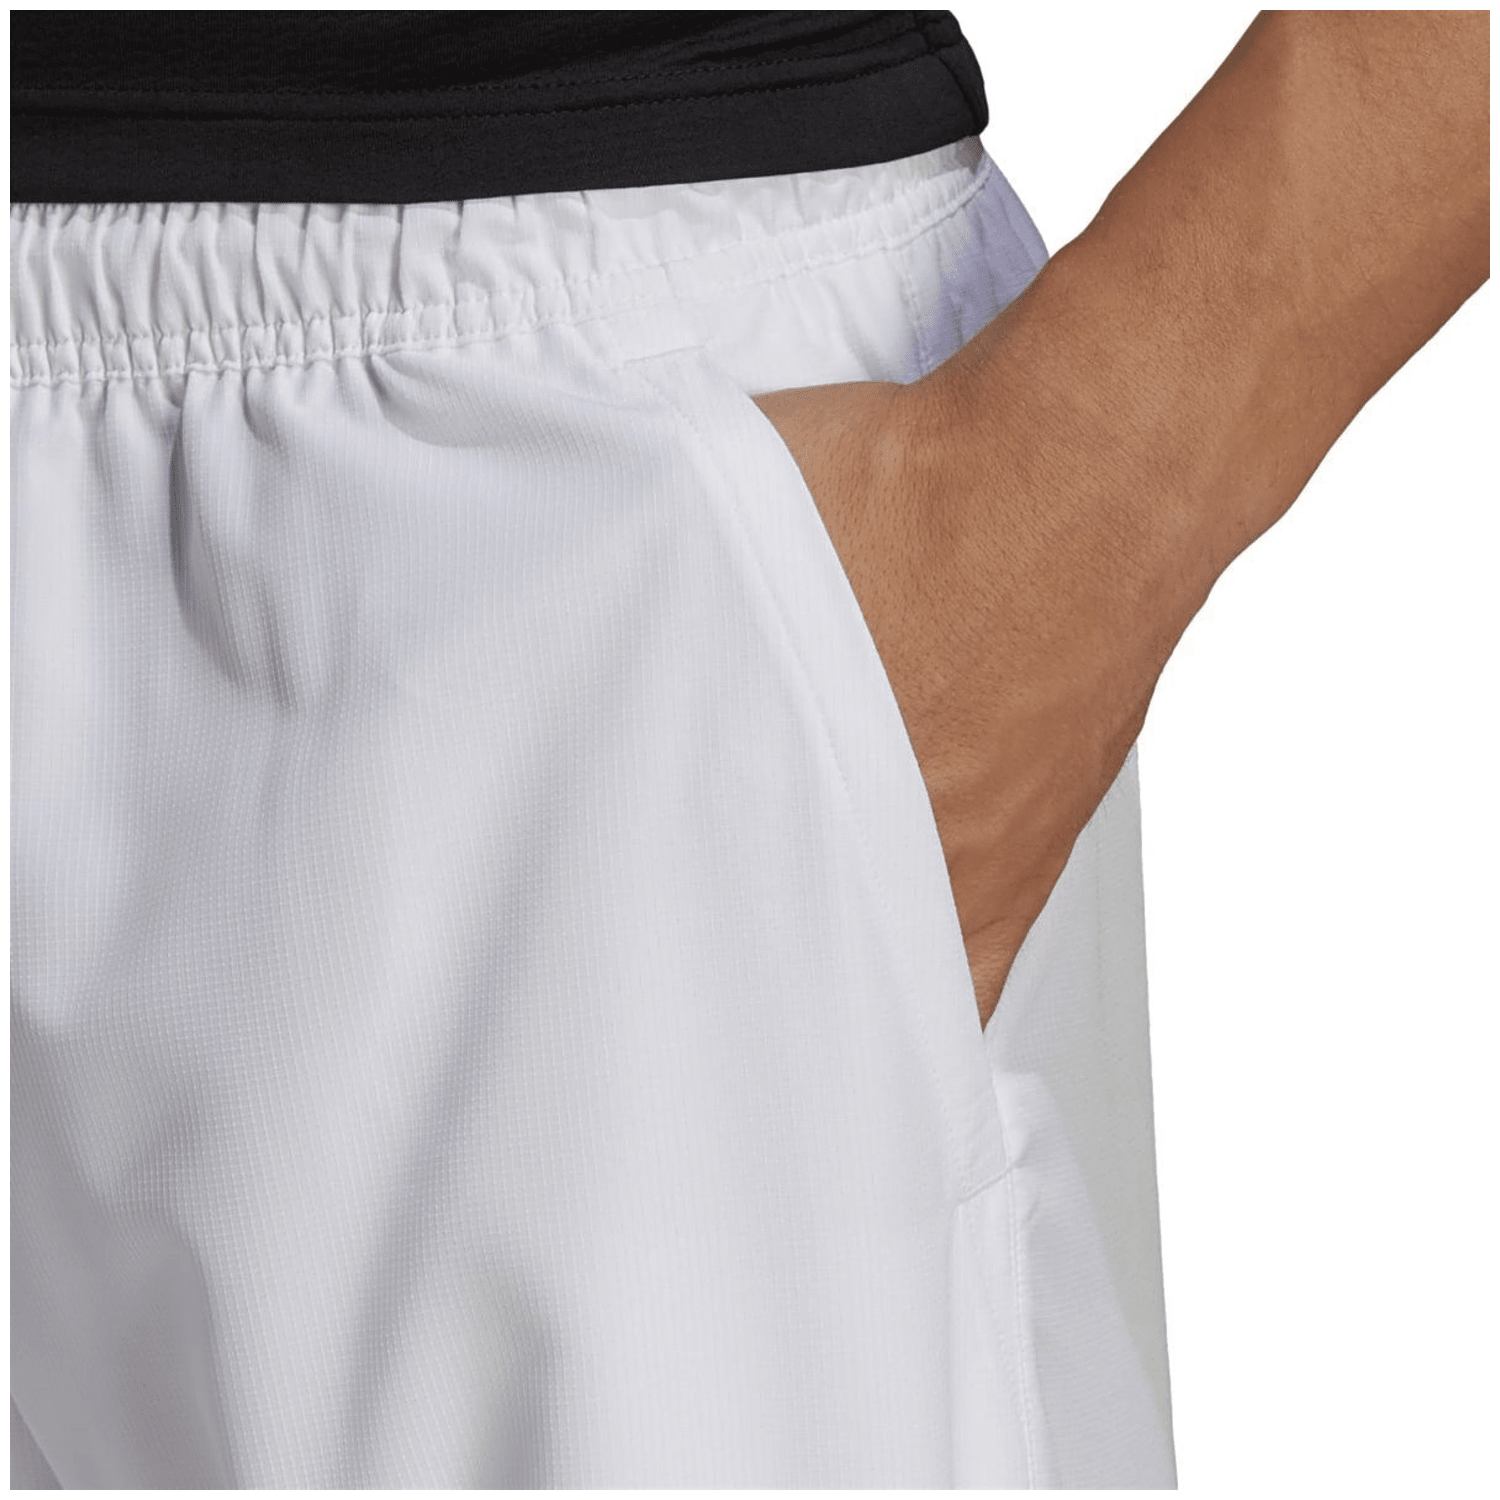 Adidas Club Tennis Shorts 7" Herren